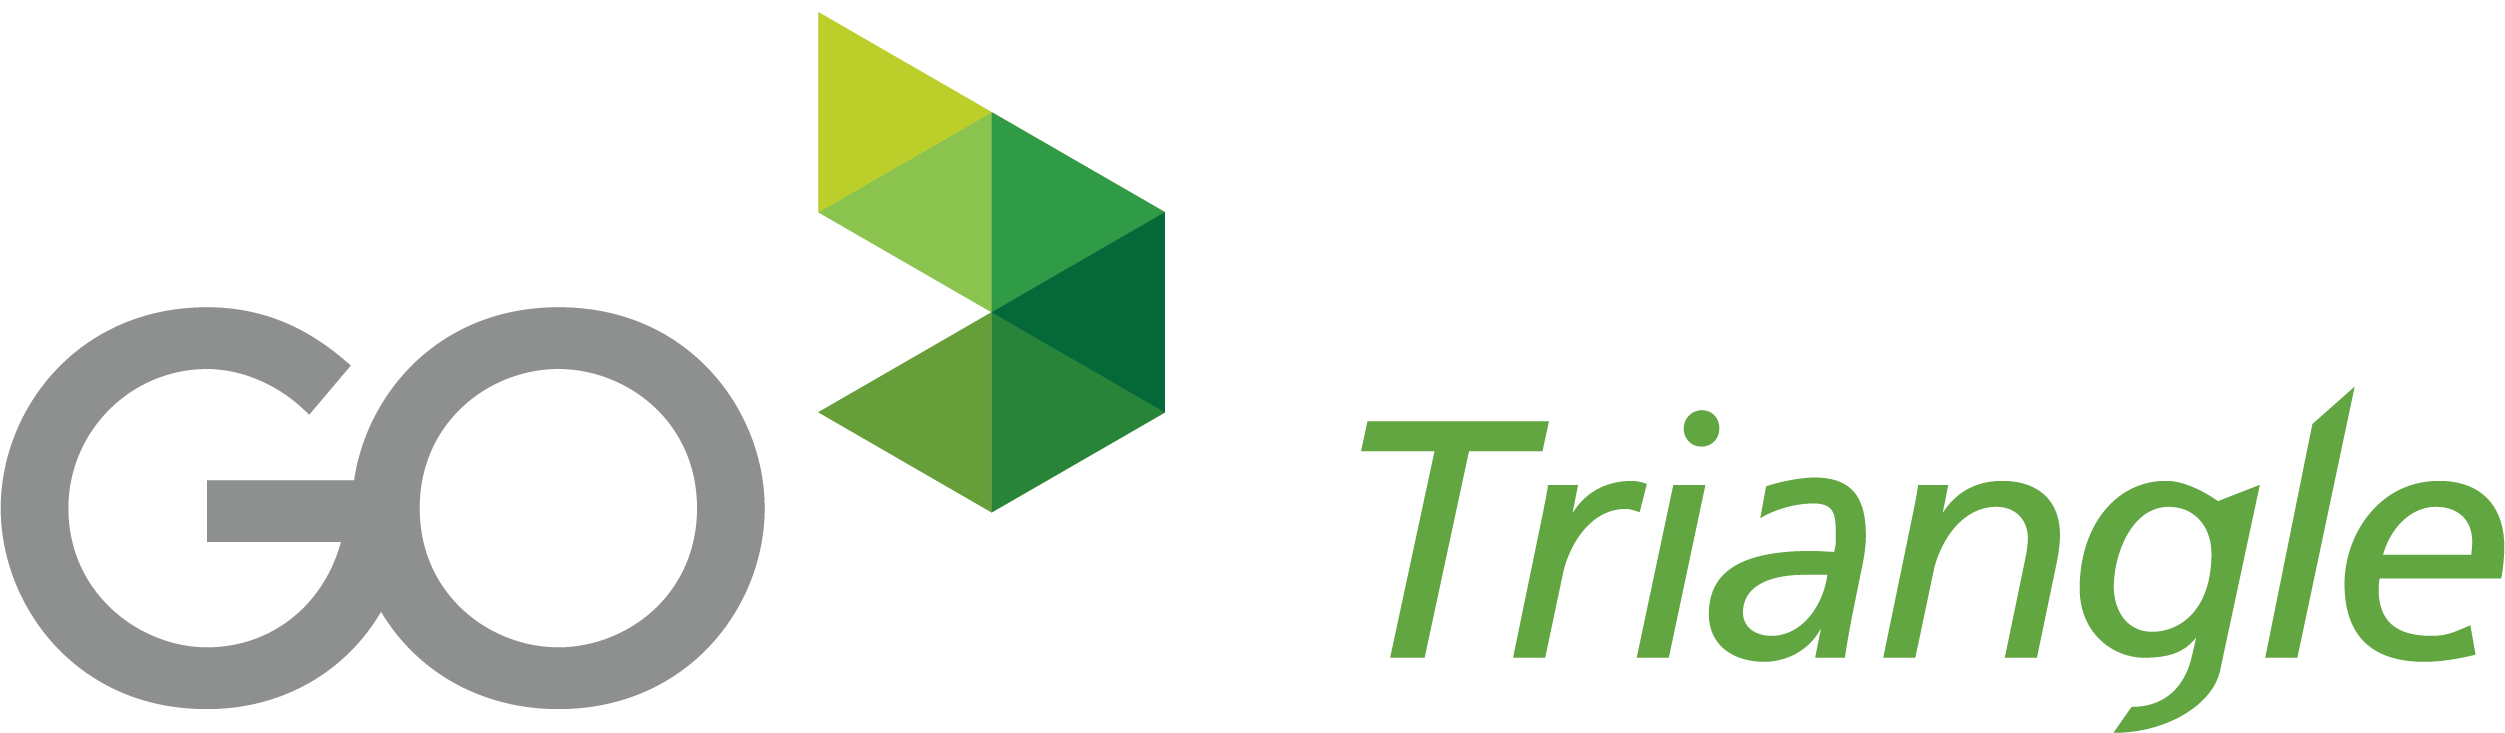 Google Triangle Logo - GoTriangle